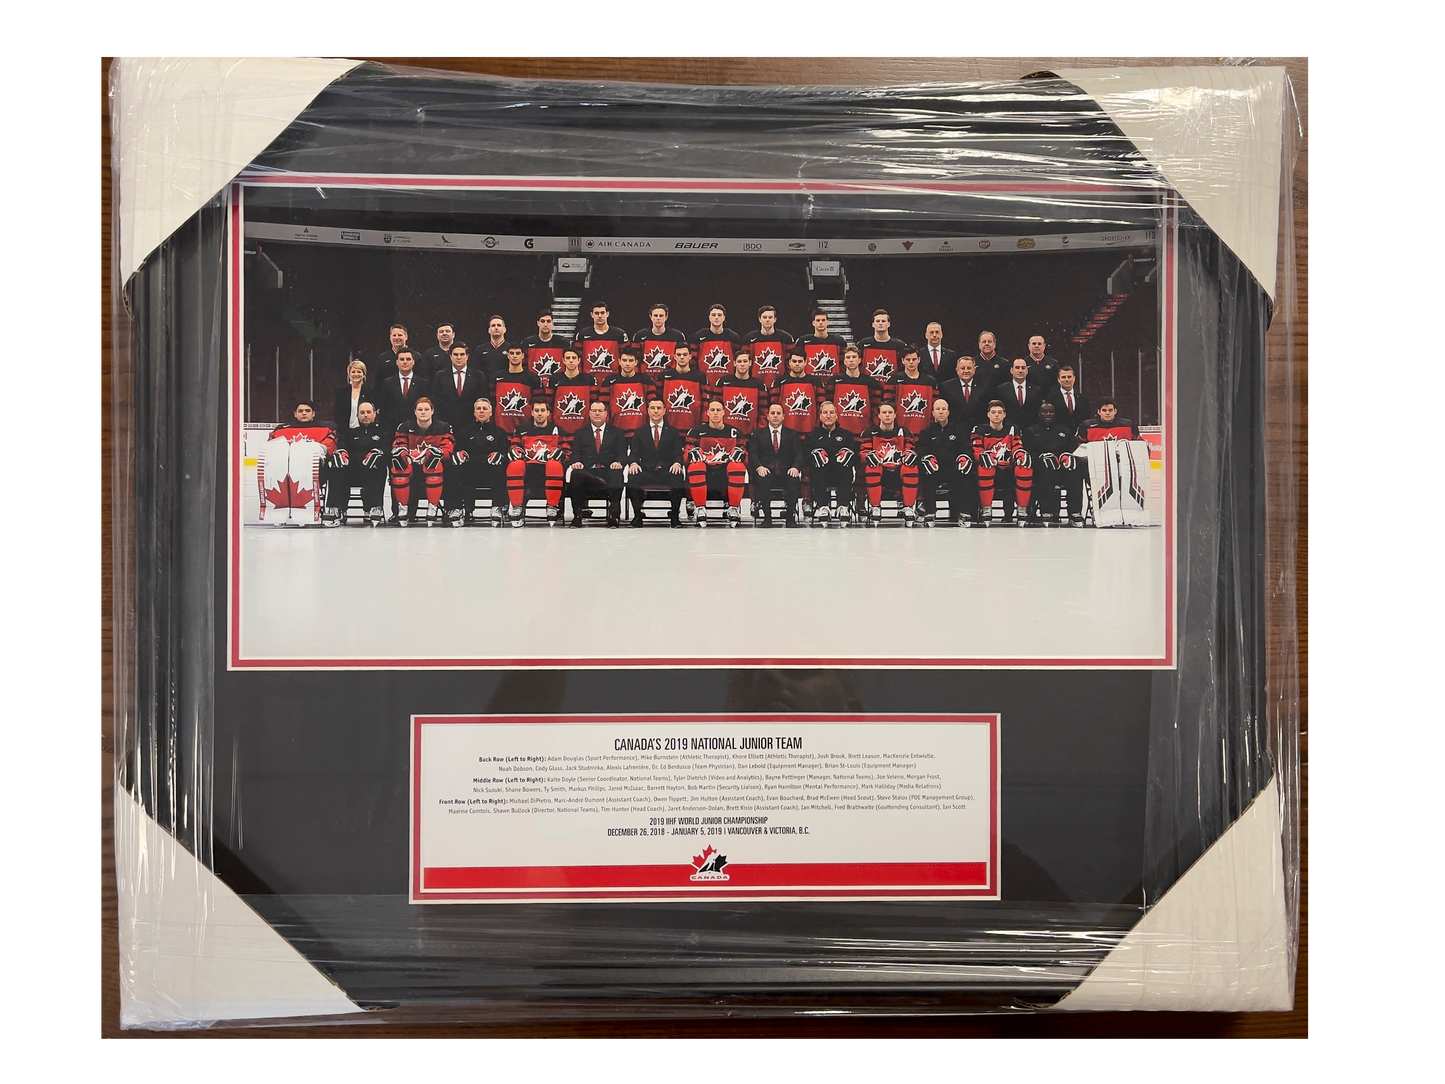 World Junior Team Canada Framed Photo